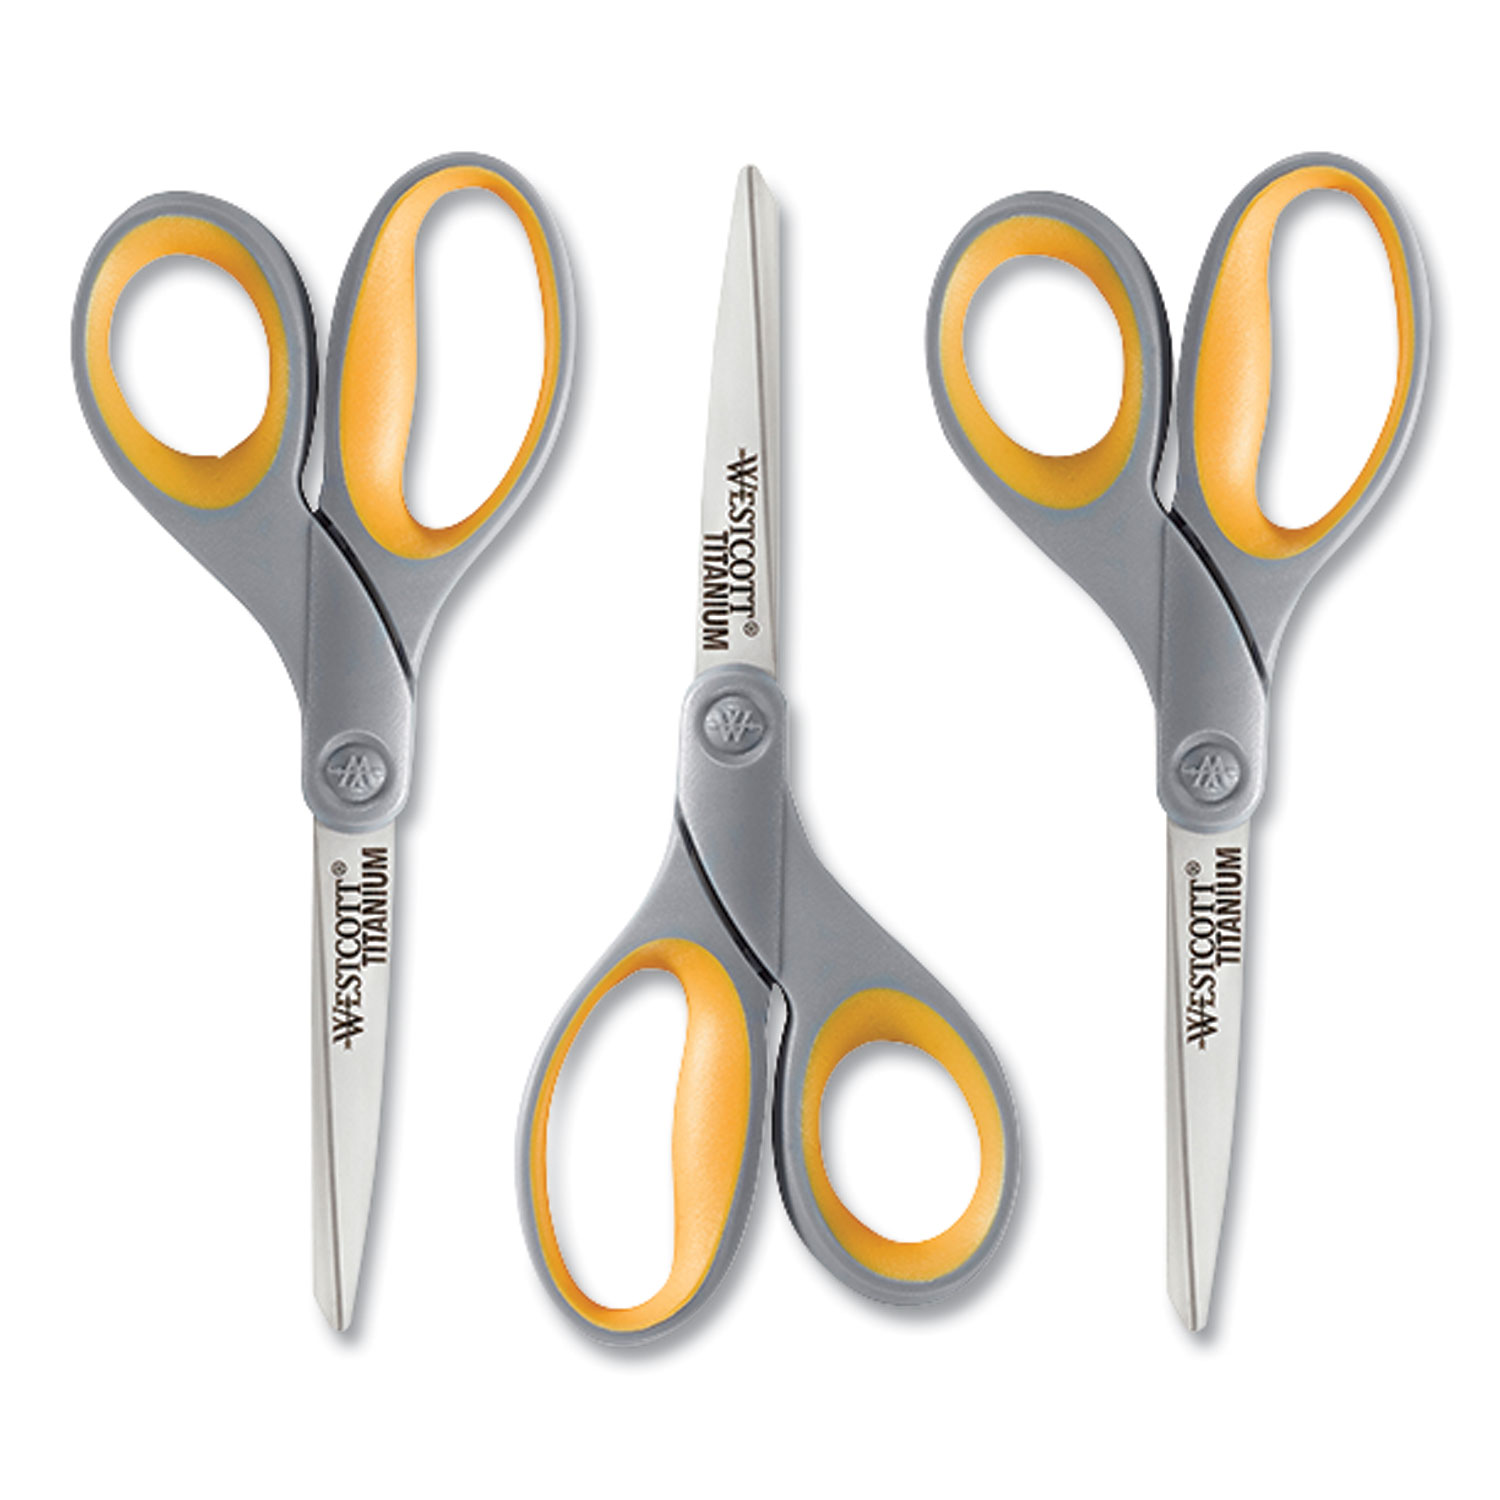  Westcott 17532 Titanium Bonded Scissors, 8 Long, 3.5 Cut Length, Gray/Yellow Straight Handle, 3/Box (WTC24395089) 